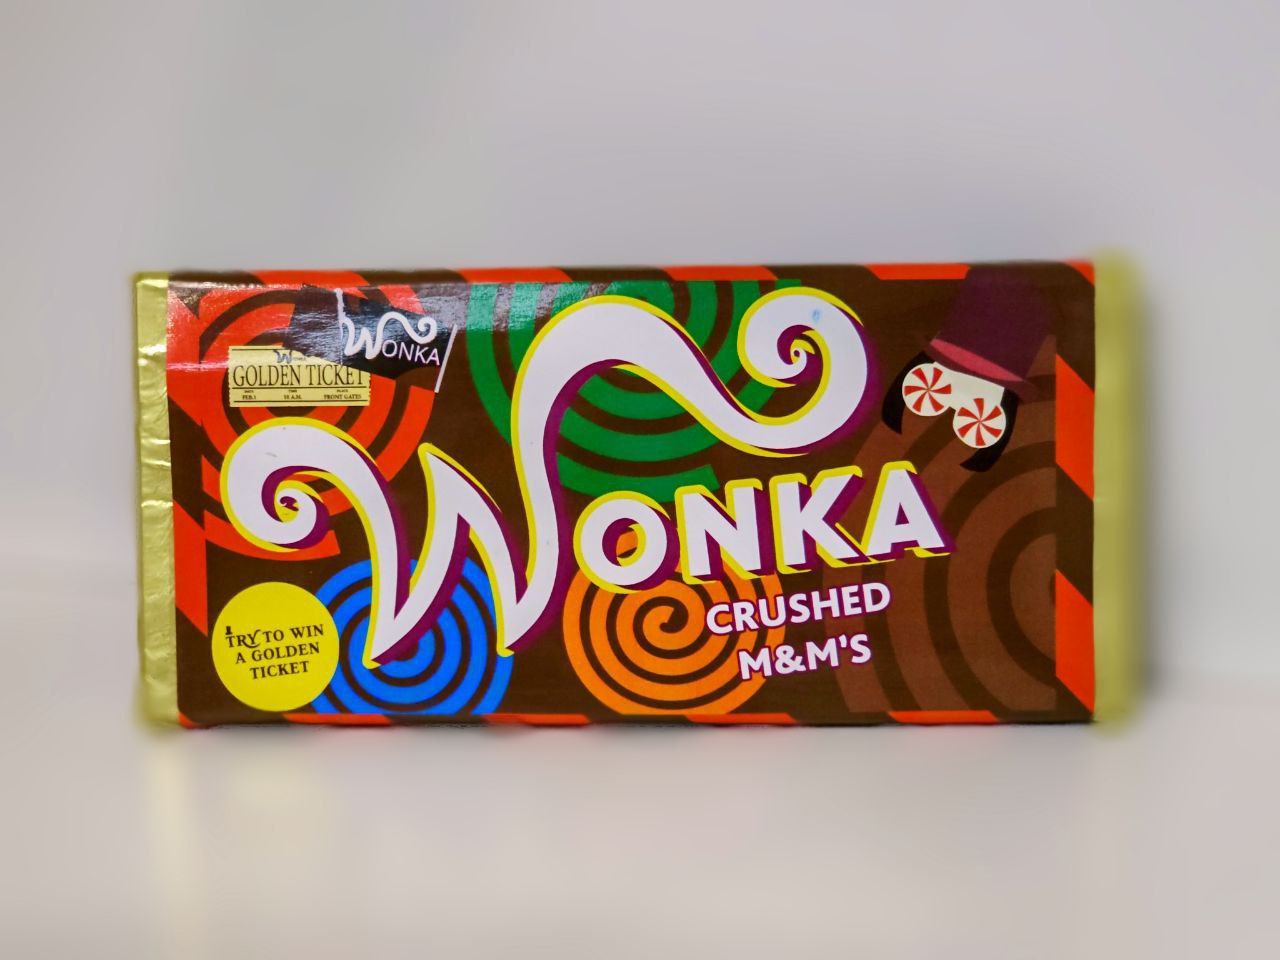 Шоколад Wonka, дробленный M&M'S, 201 г